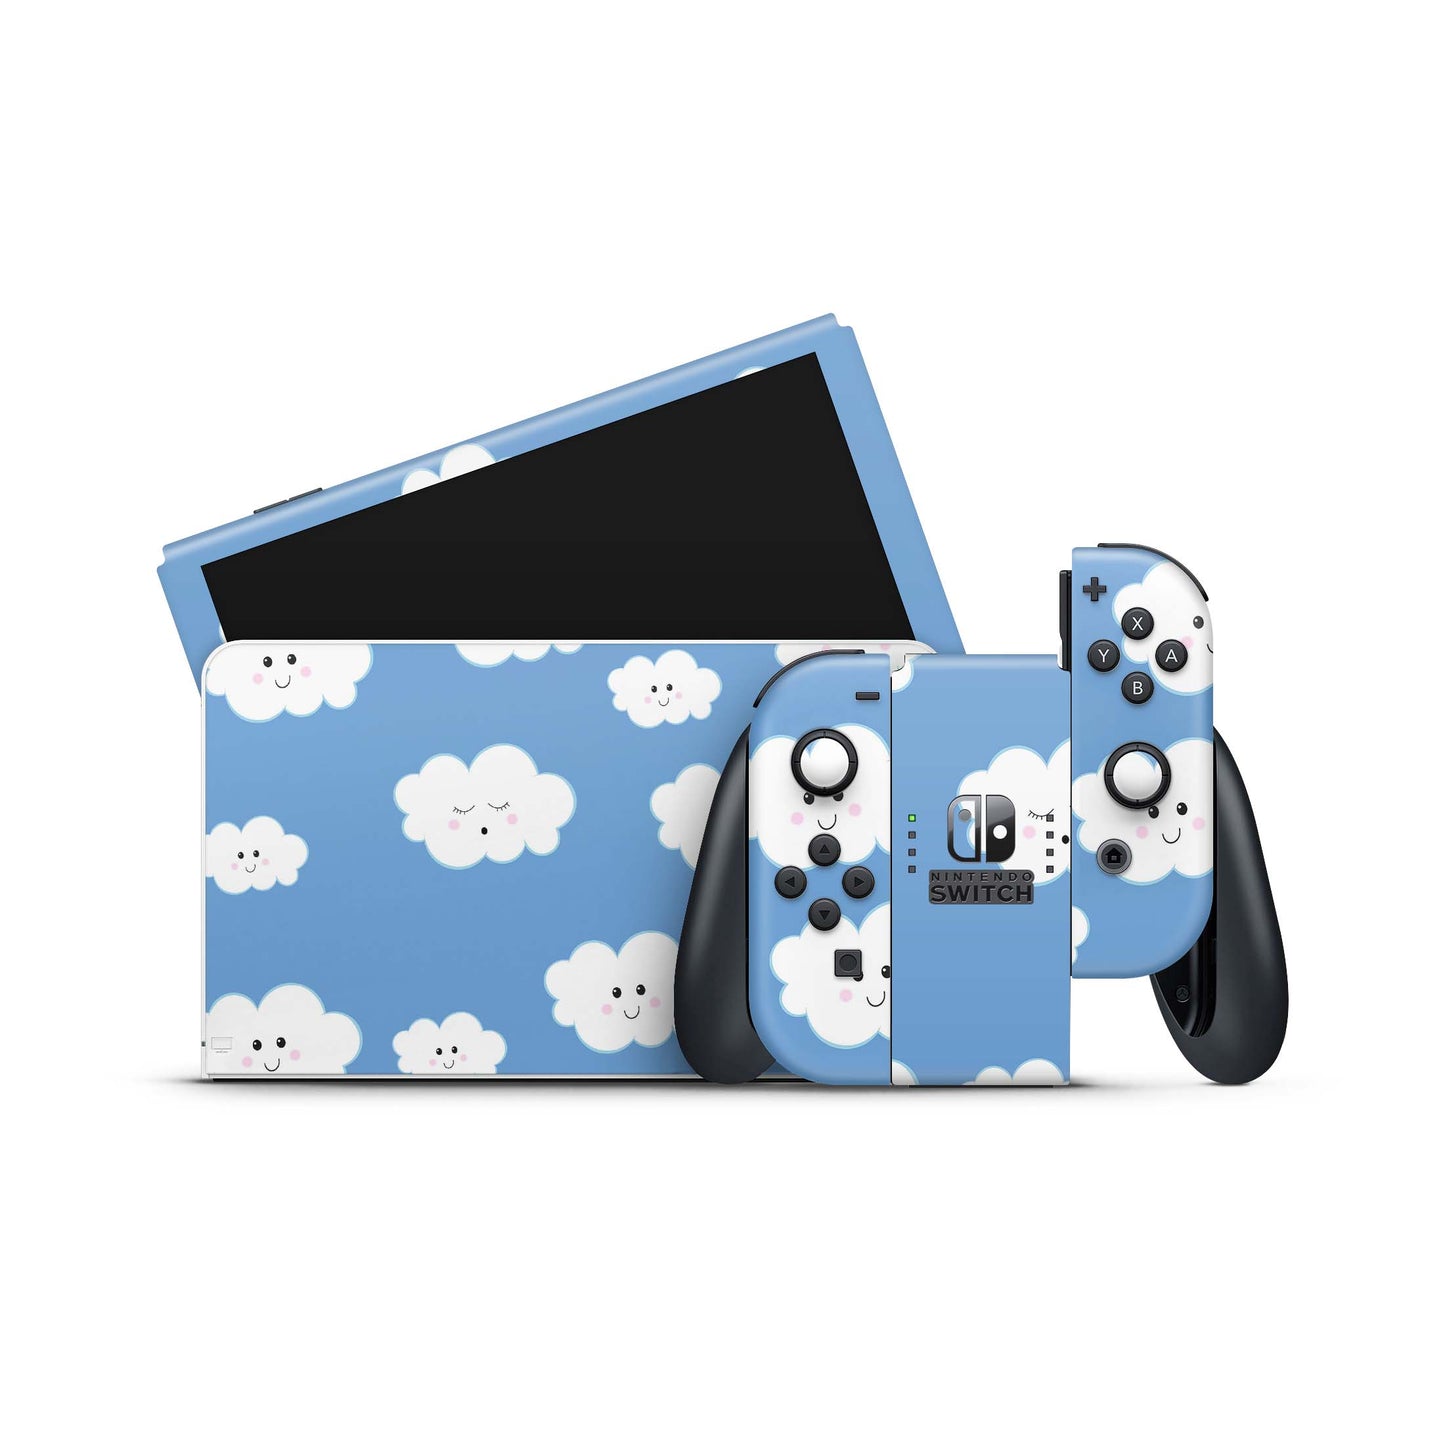 Nintendo Switch Skin Wrap Aufkleber Vinyl Skins Folie Design blaue Wolken Aufkleber Skins4u   